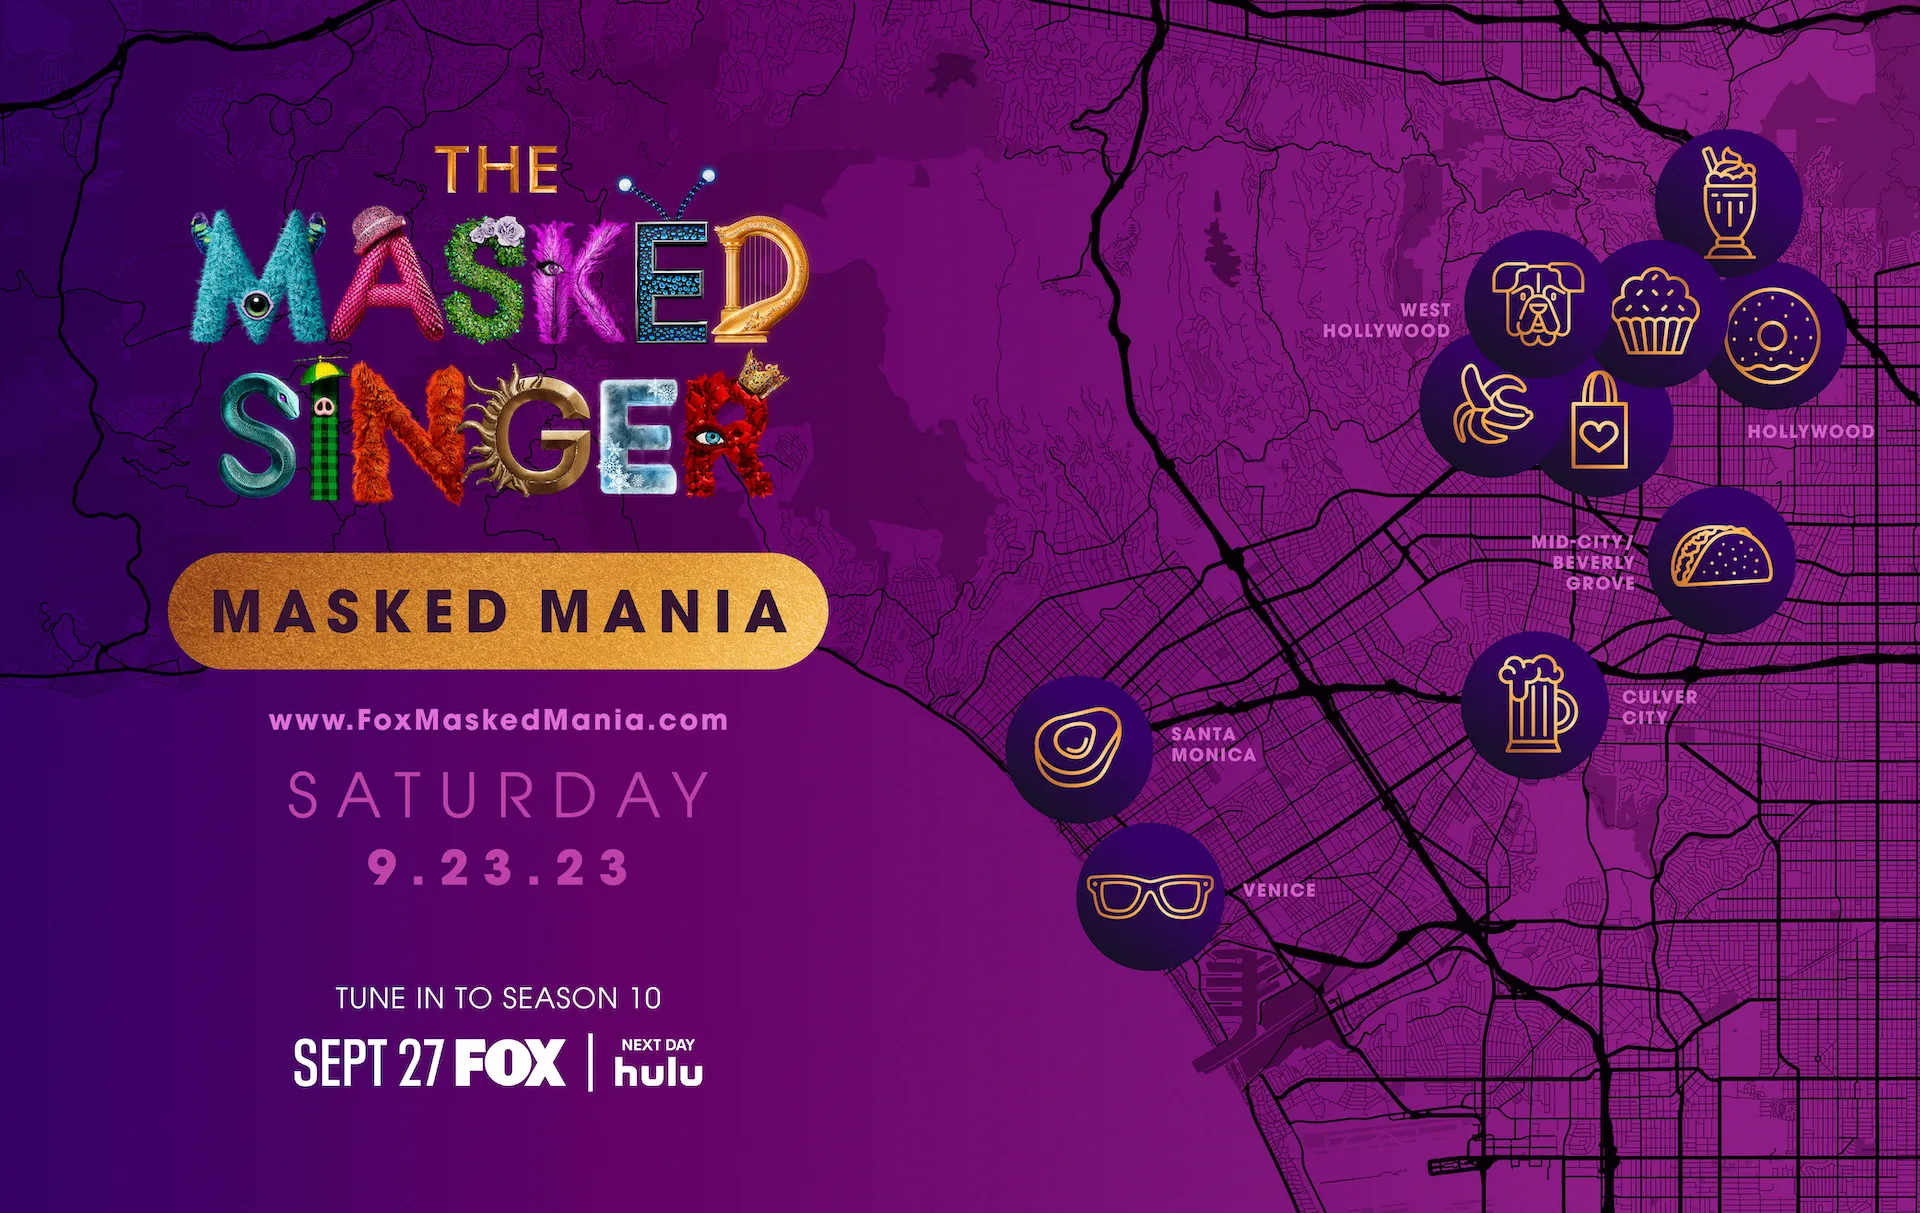 Masked Mania Takes Over LA